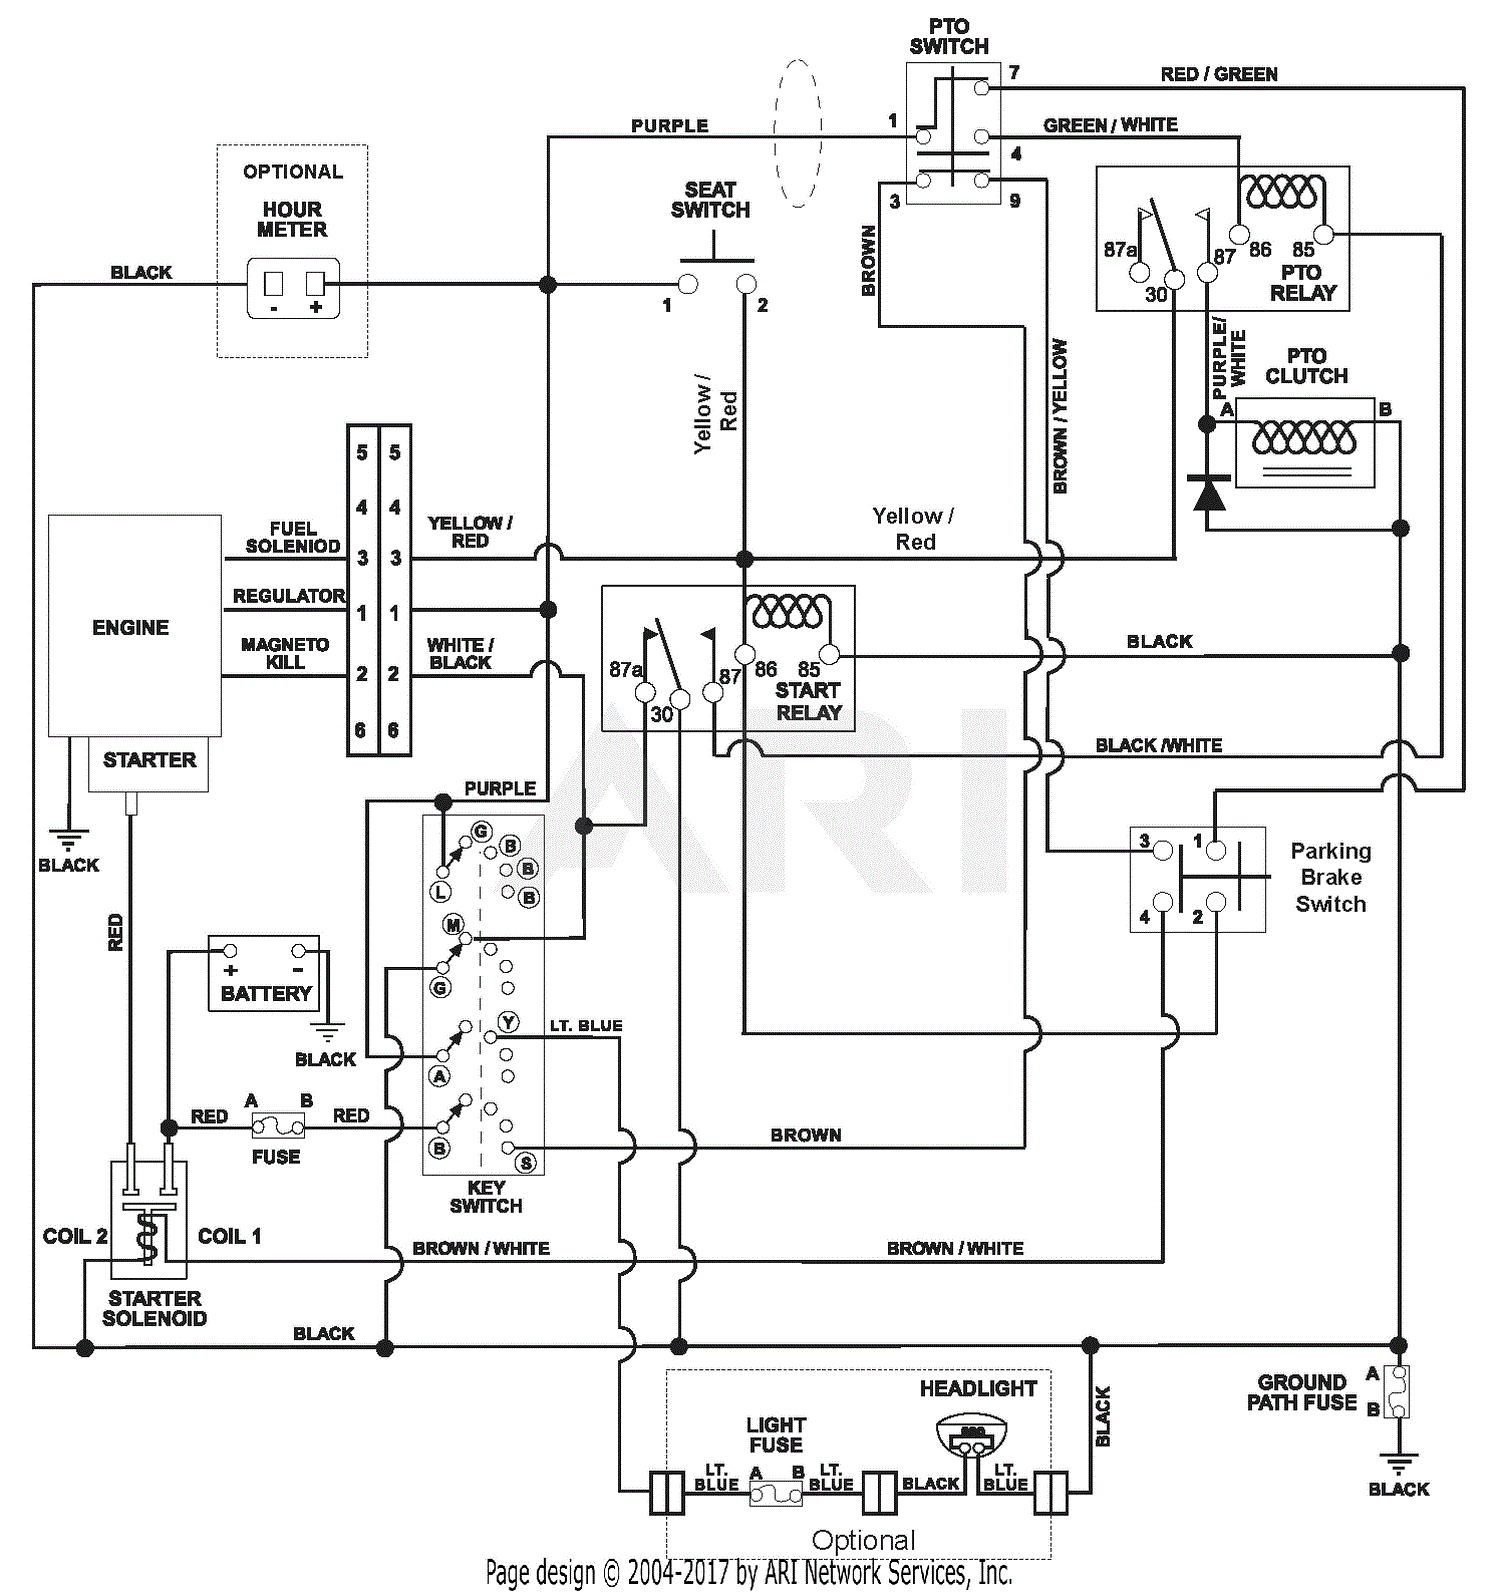 Gravely 915106 000101 Zt 2350 23hp Kohler 50 Deck Parts Diagram For Wiring Diagram